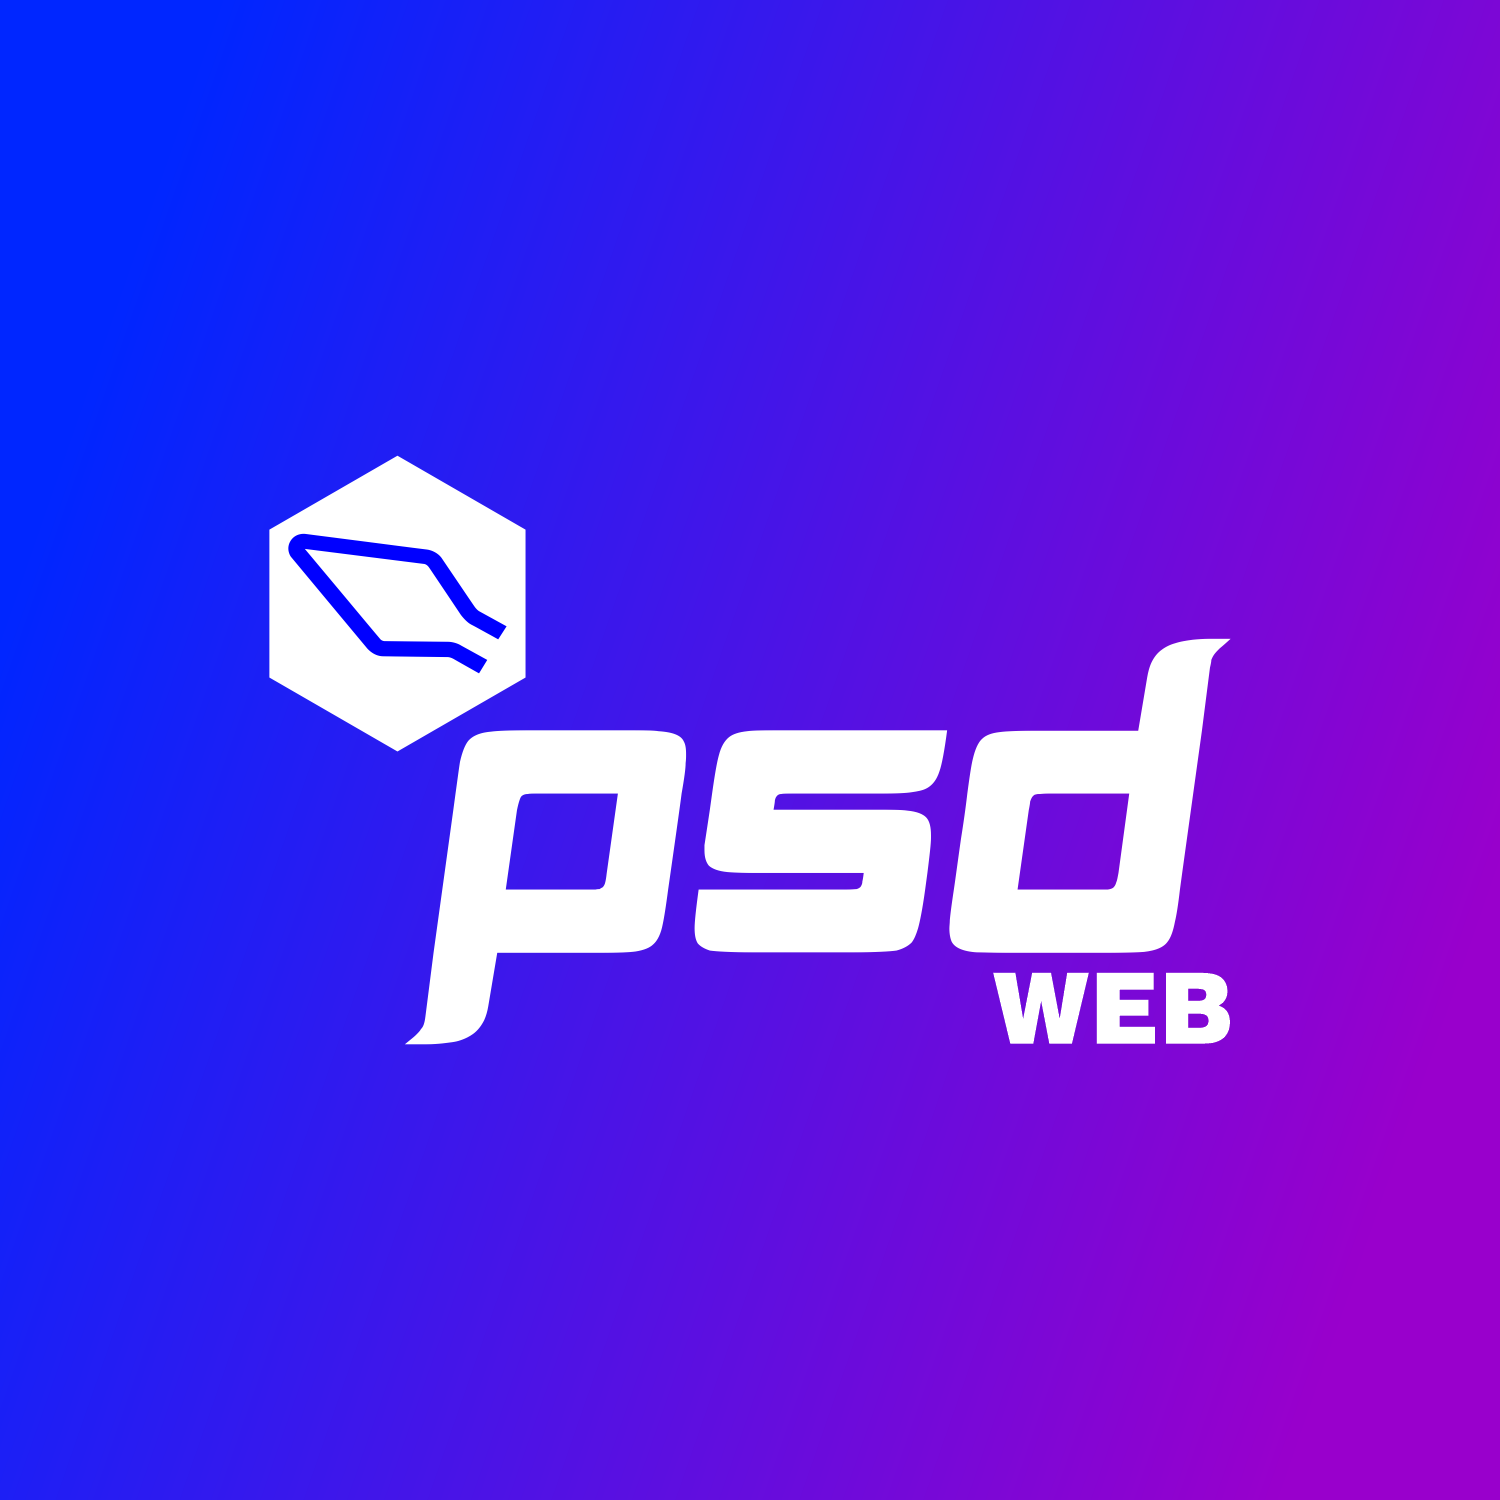 PSD Web